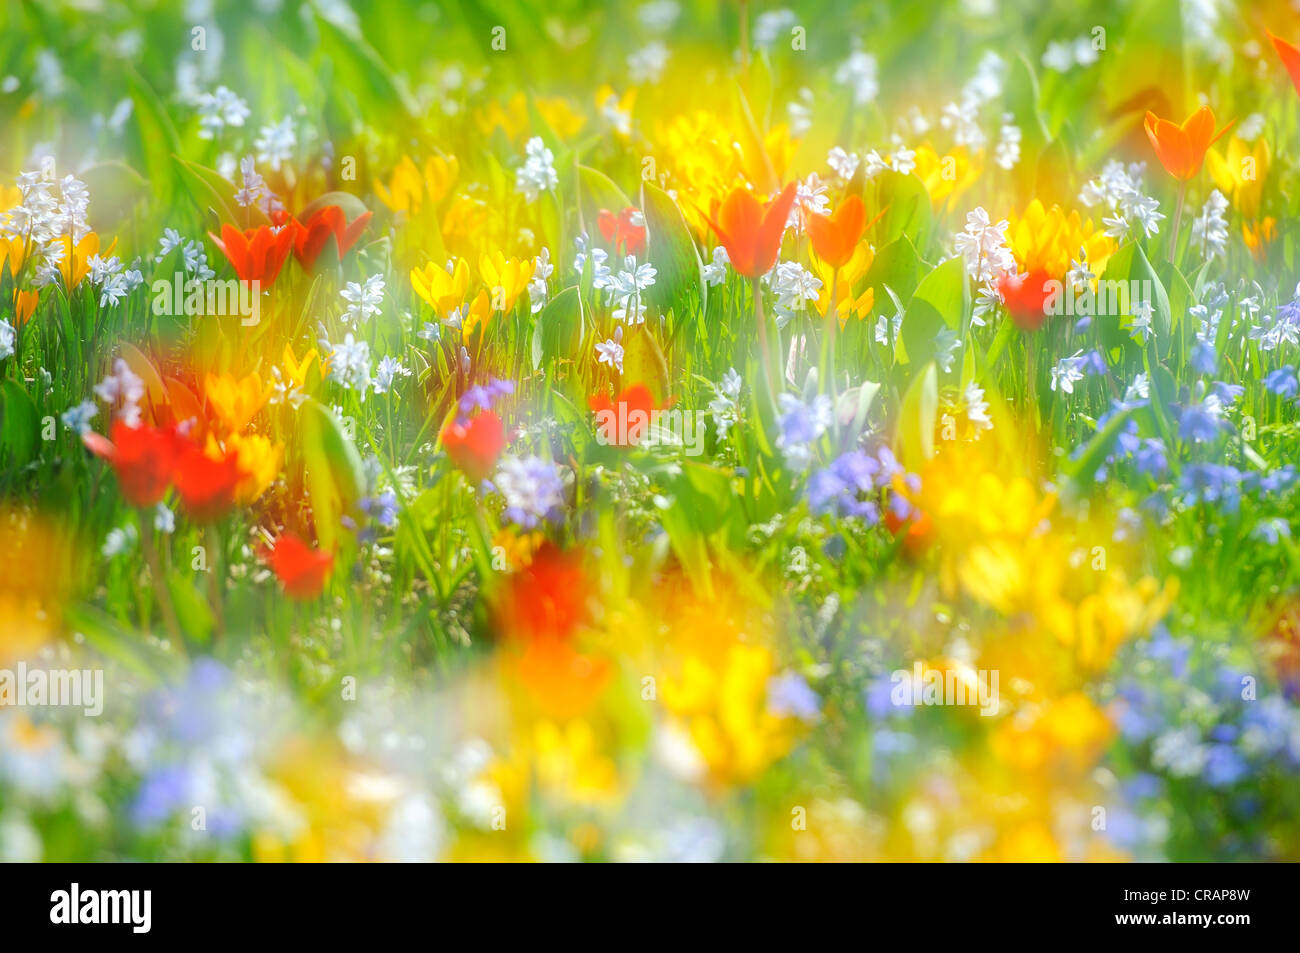 Spring meadow with tulips (Tulipa), crocus (Crocus), and squills (Scilla) Stock Photo